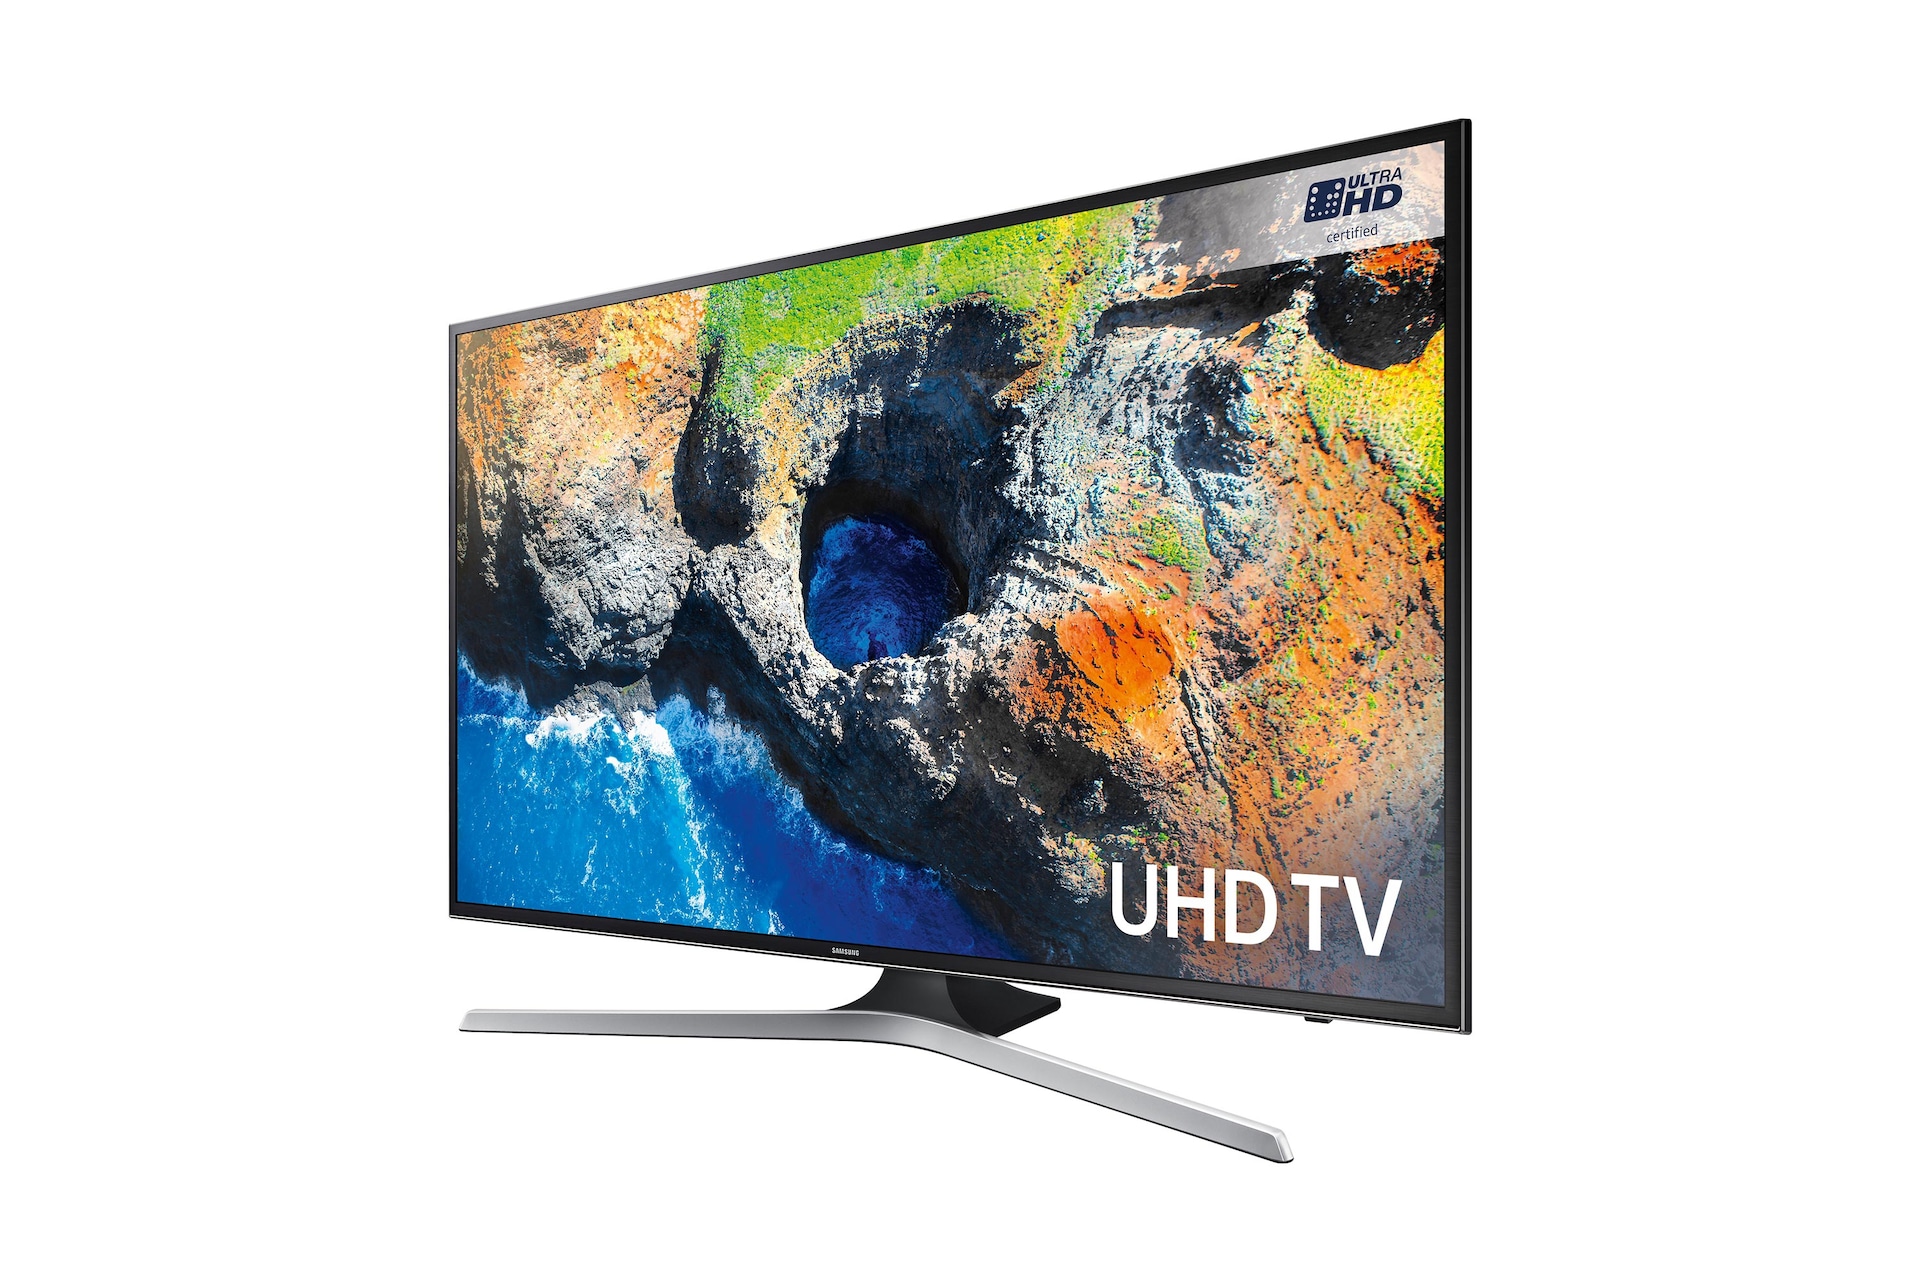 Samsung 4K UHD TV MU6100 - Best 75 inch Smart TV to buy | Samsung UK